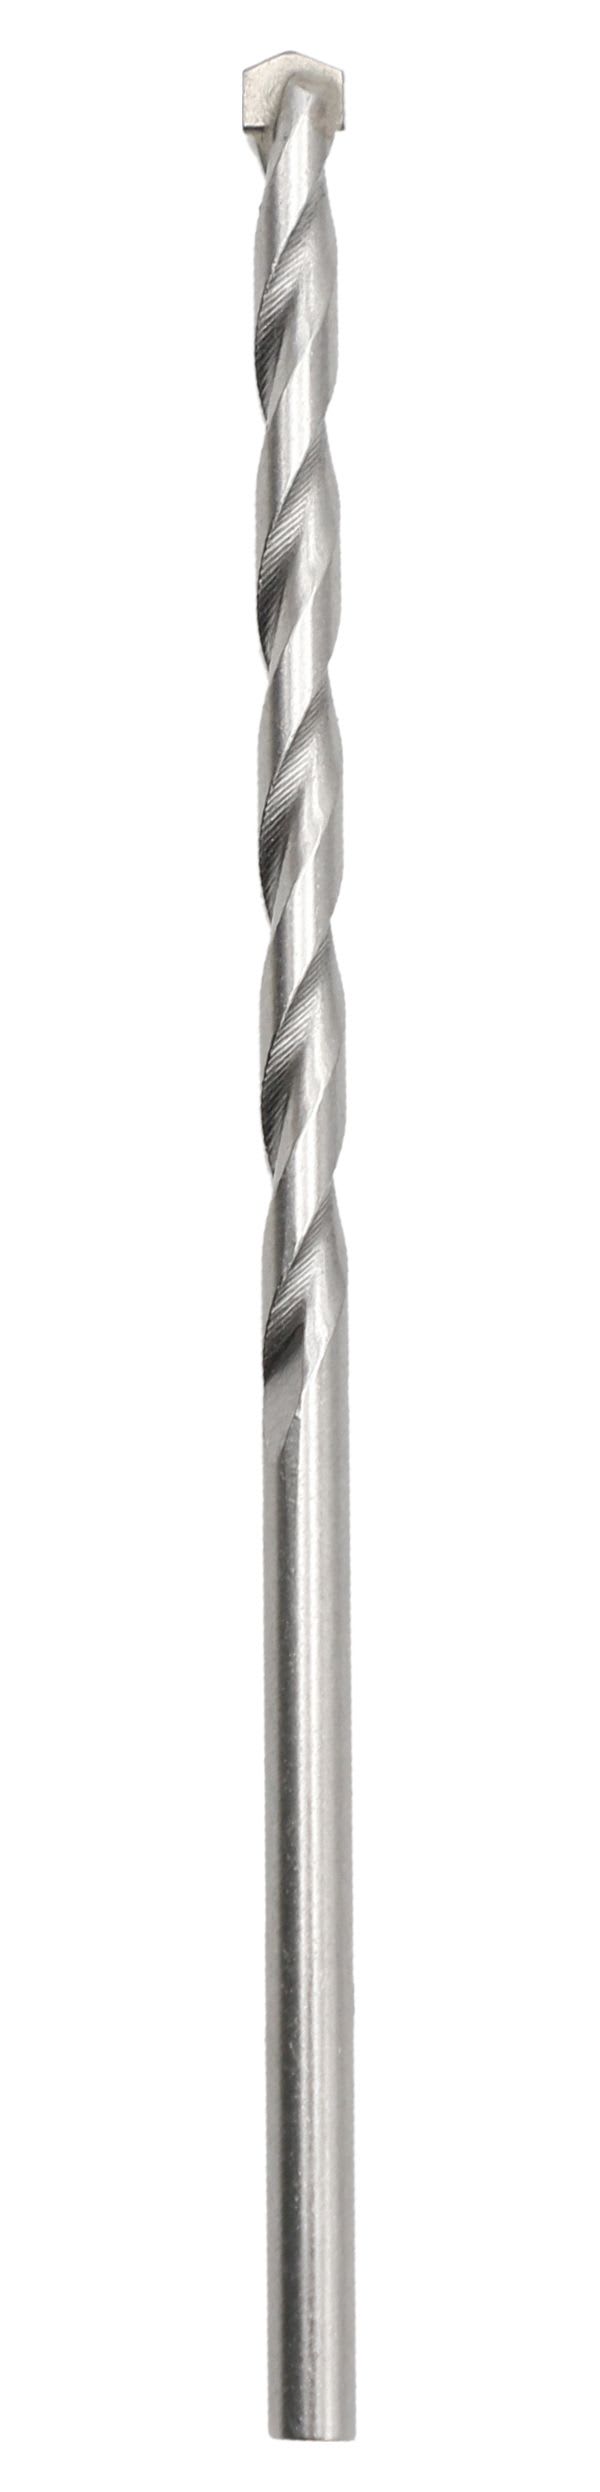 14x Silverline Pocket Hole Screw Jig c/w Dowel Screw Joint Hole Drill Tools Sets 